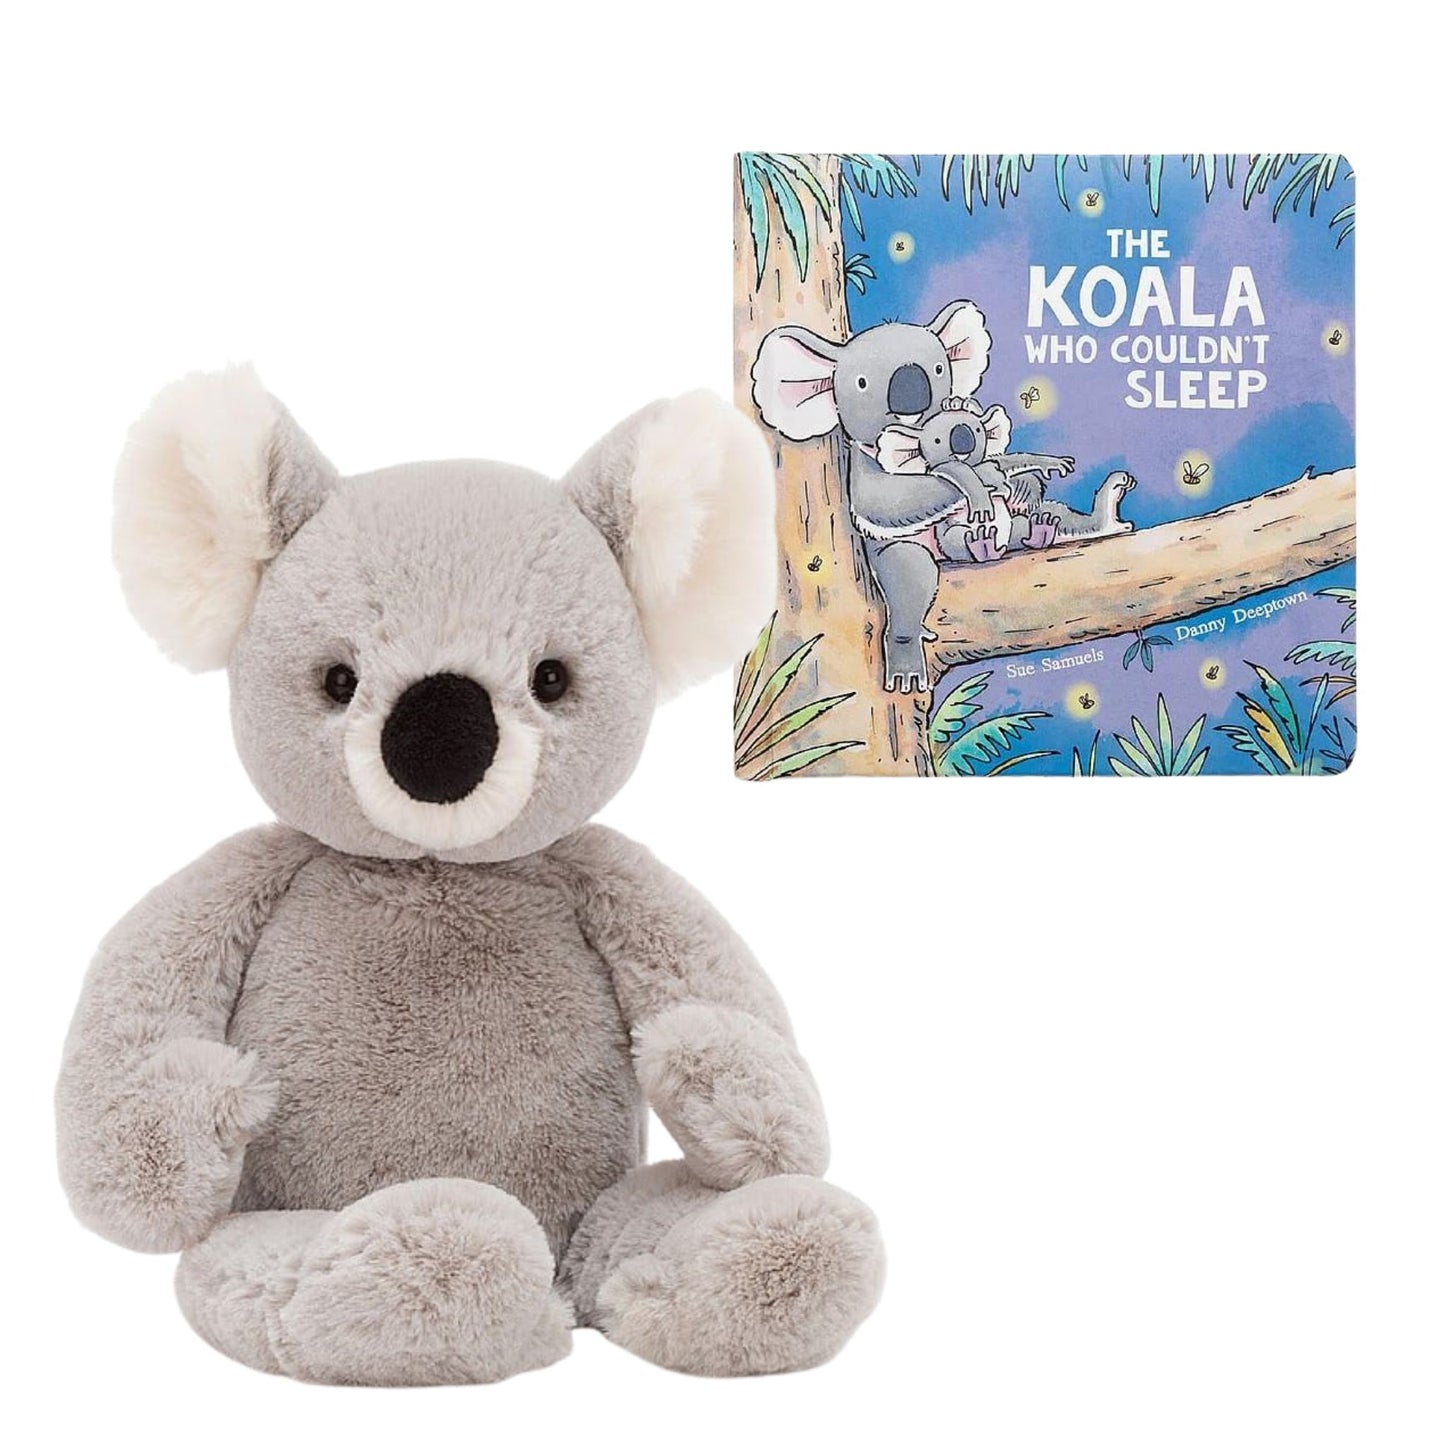 The Koala Who Could’nt Sleep and Benji Koala